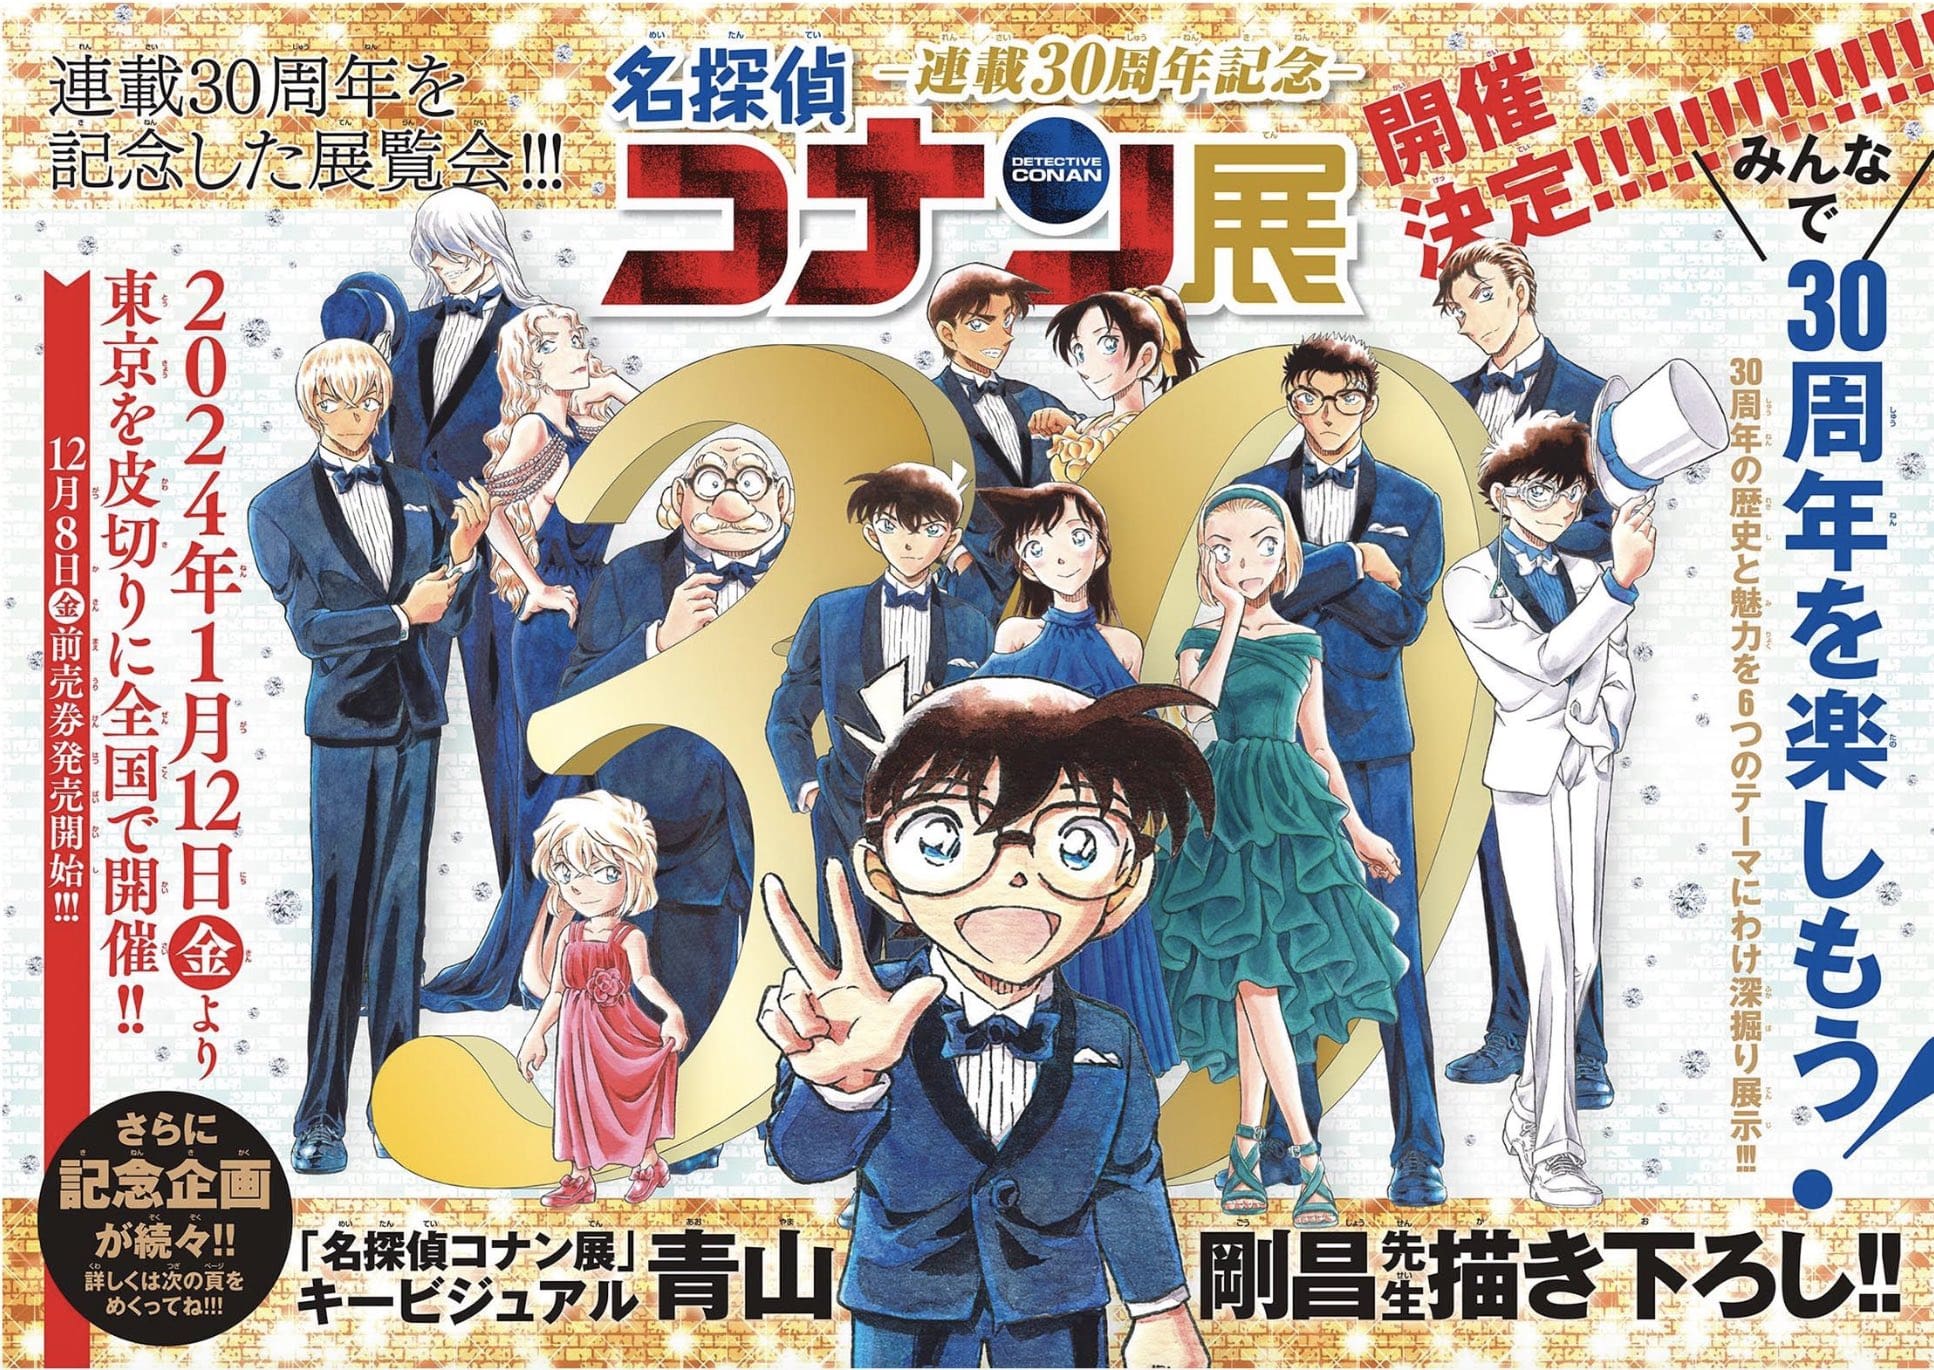 30th Anniversary Detective Conan Exhibition